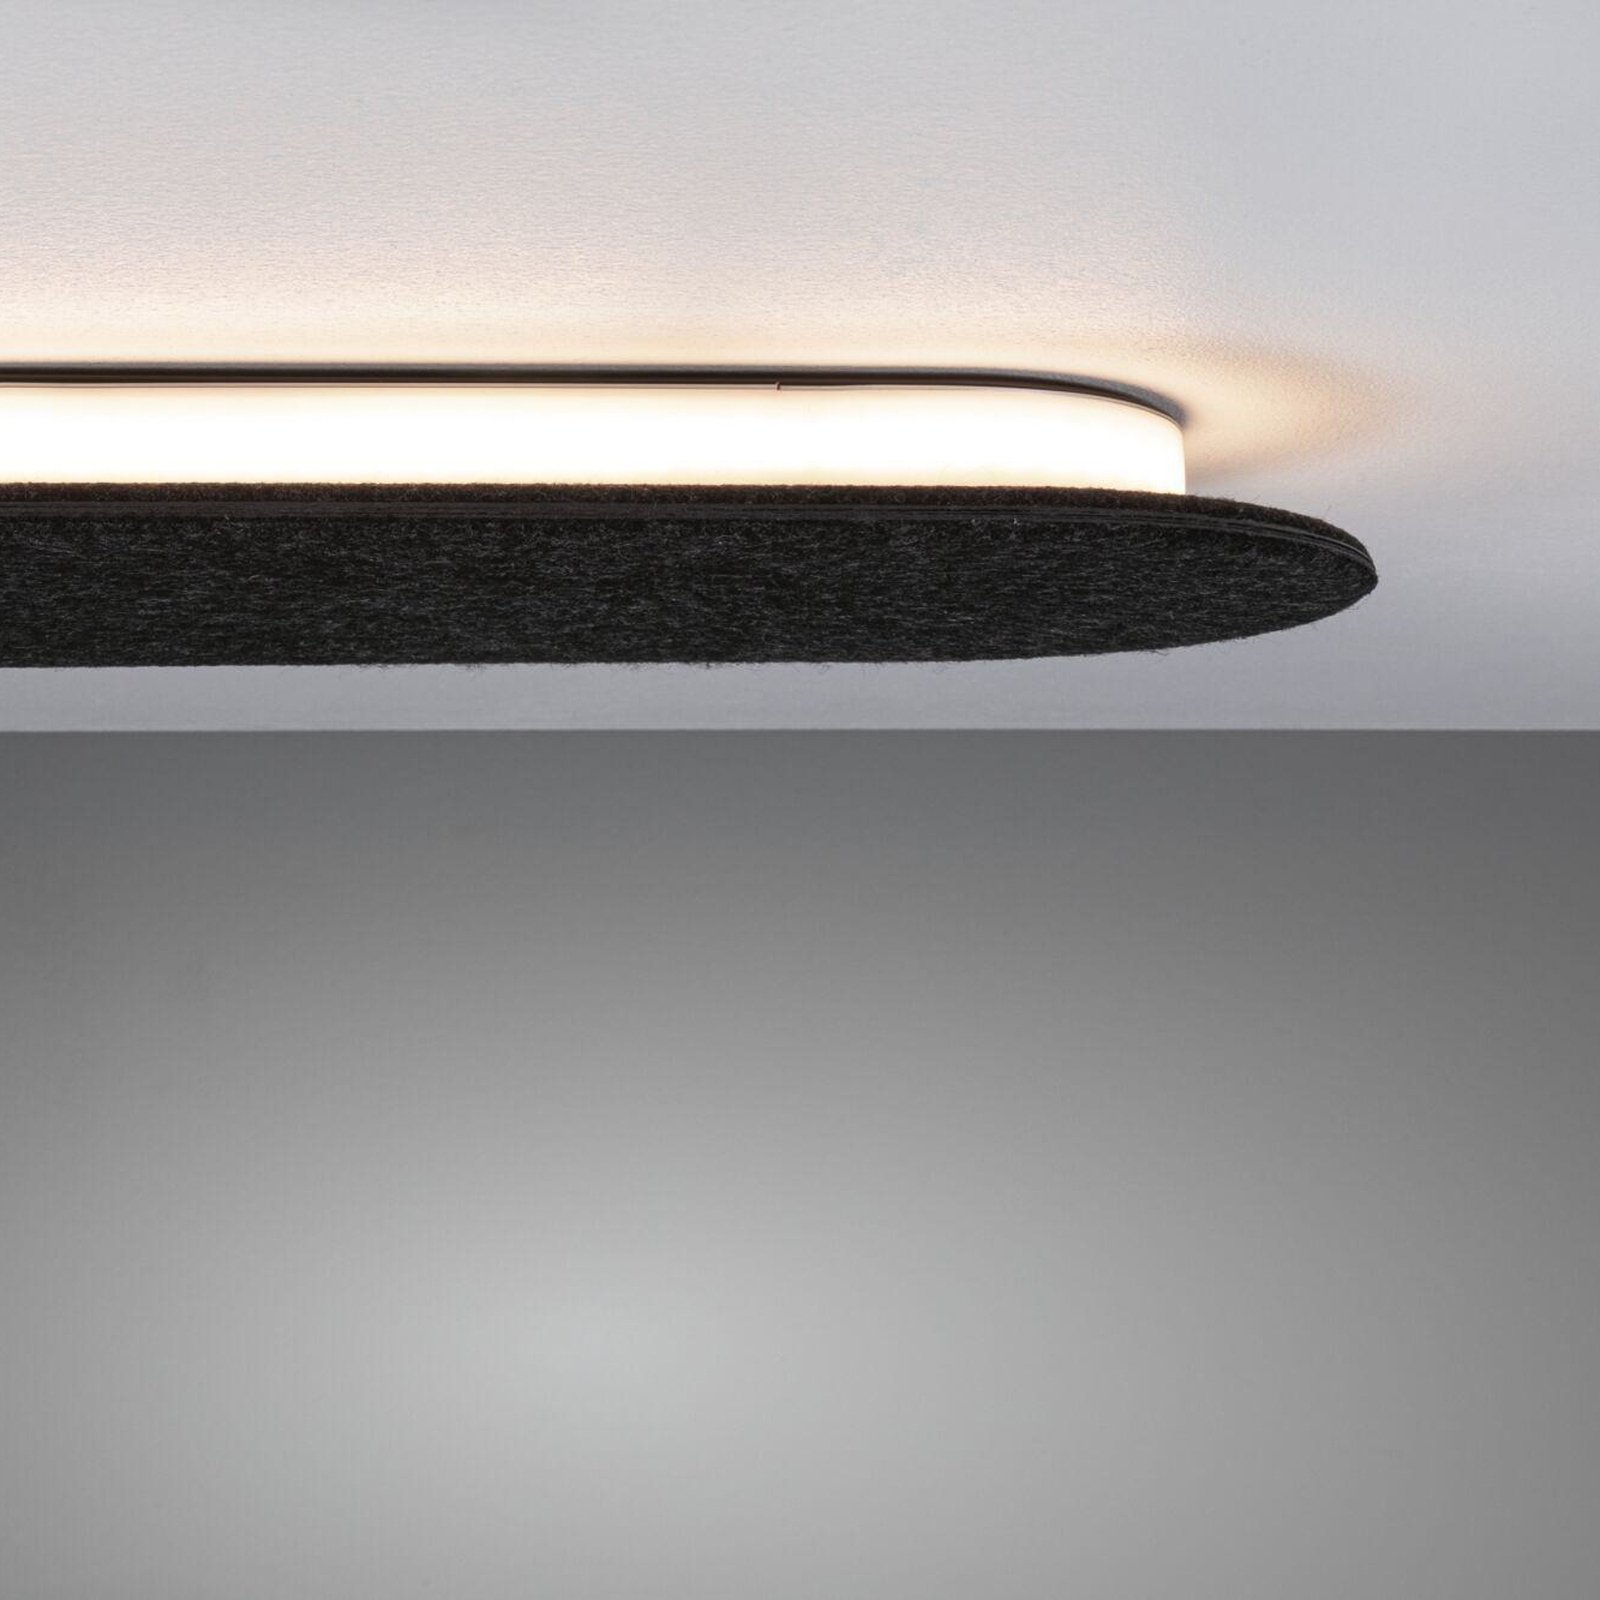 Paulmann LED wandlamp Tulga, 45 x 20 cm, antraciet, vilt